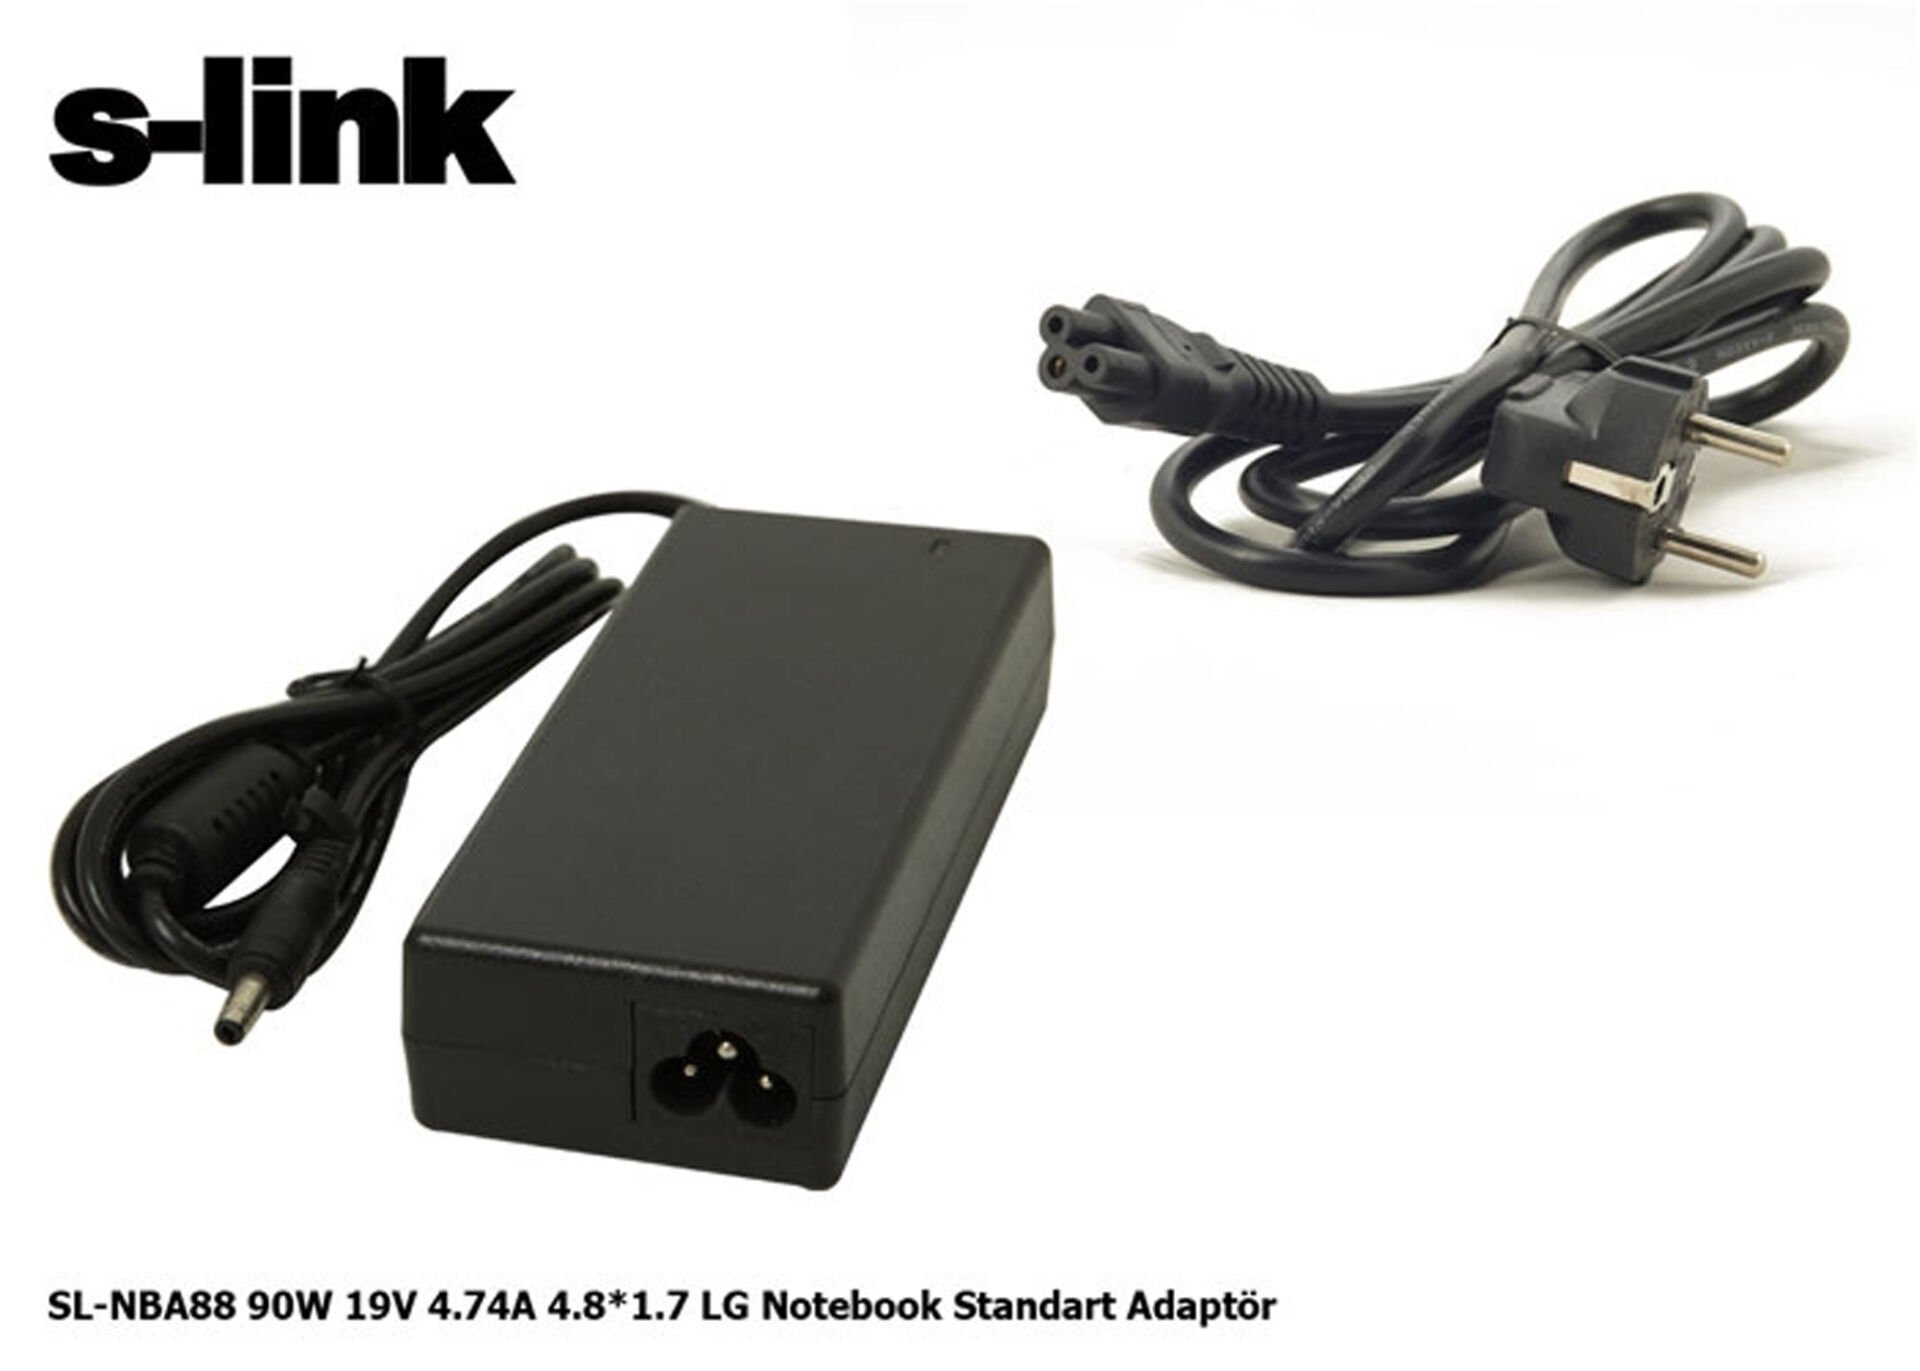 S-link LG Notebook Adaptörü SL-NBA88 90w 19v 4.74a 4.8-1.7